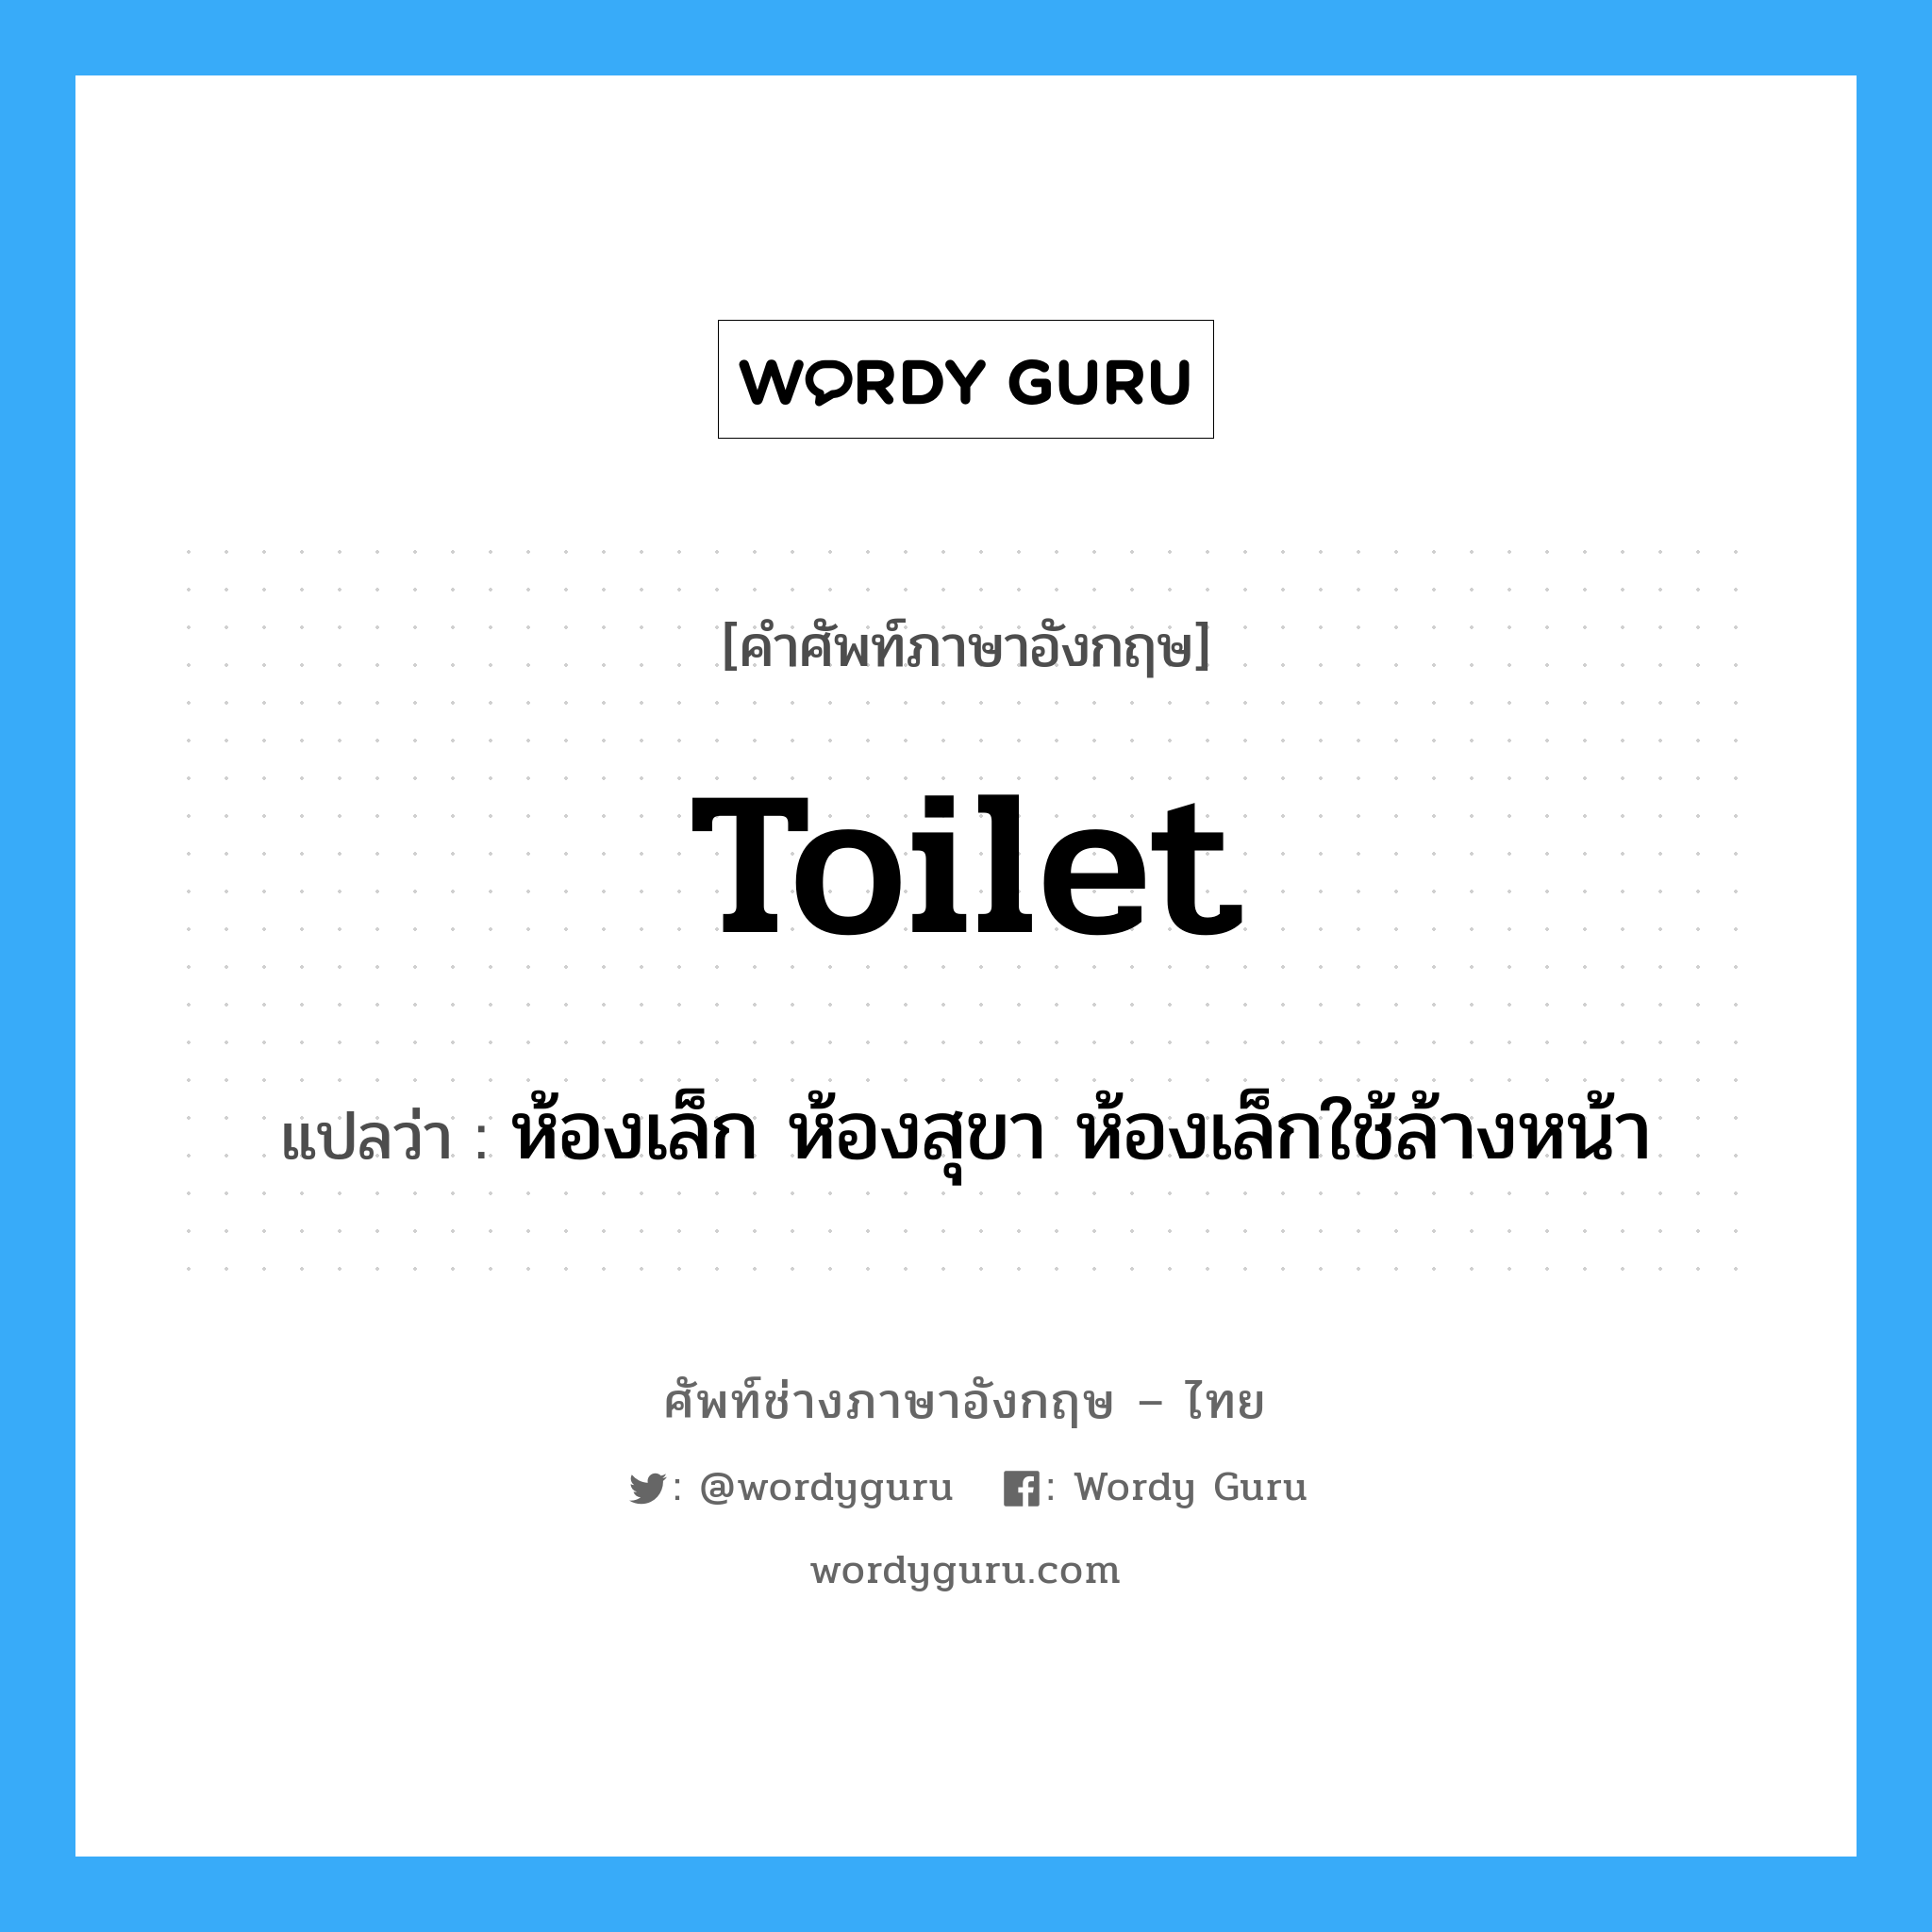 toilet แปลว่า?, คำศัพท์ช่างภาษาอังกฤษ - ไทย toilet คำศัพท์ภาษาอังกฤษ toilet แปลว่า ห้องเล็ก ห้องสุขา ห้องเล็กใช้ล้างหน้า